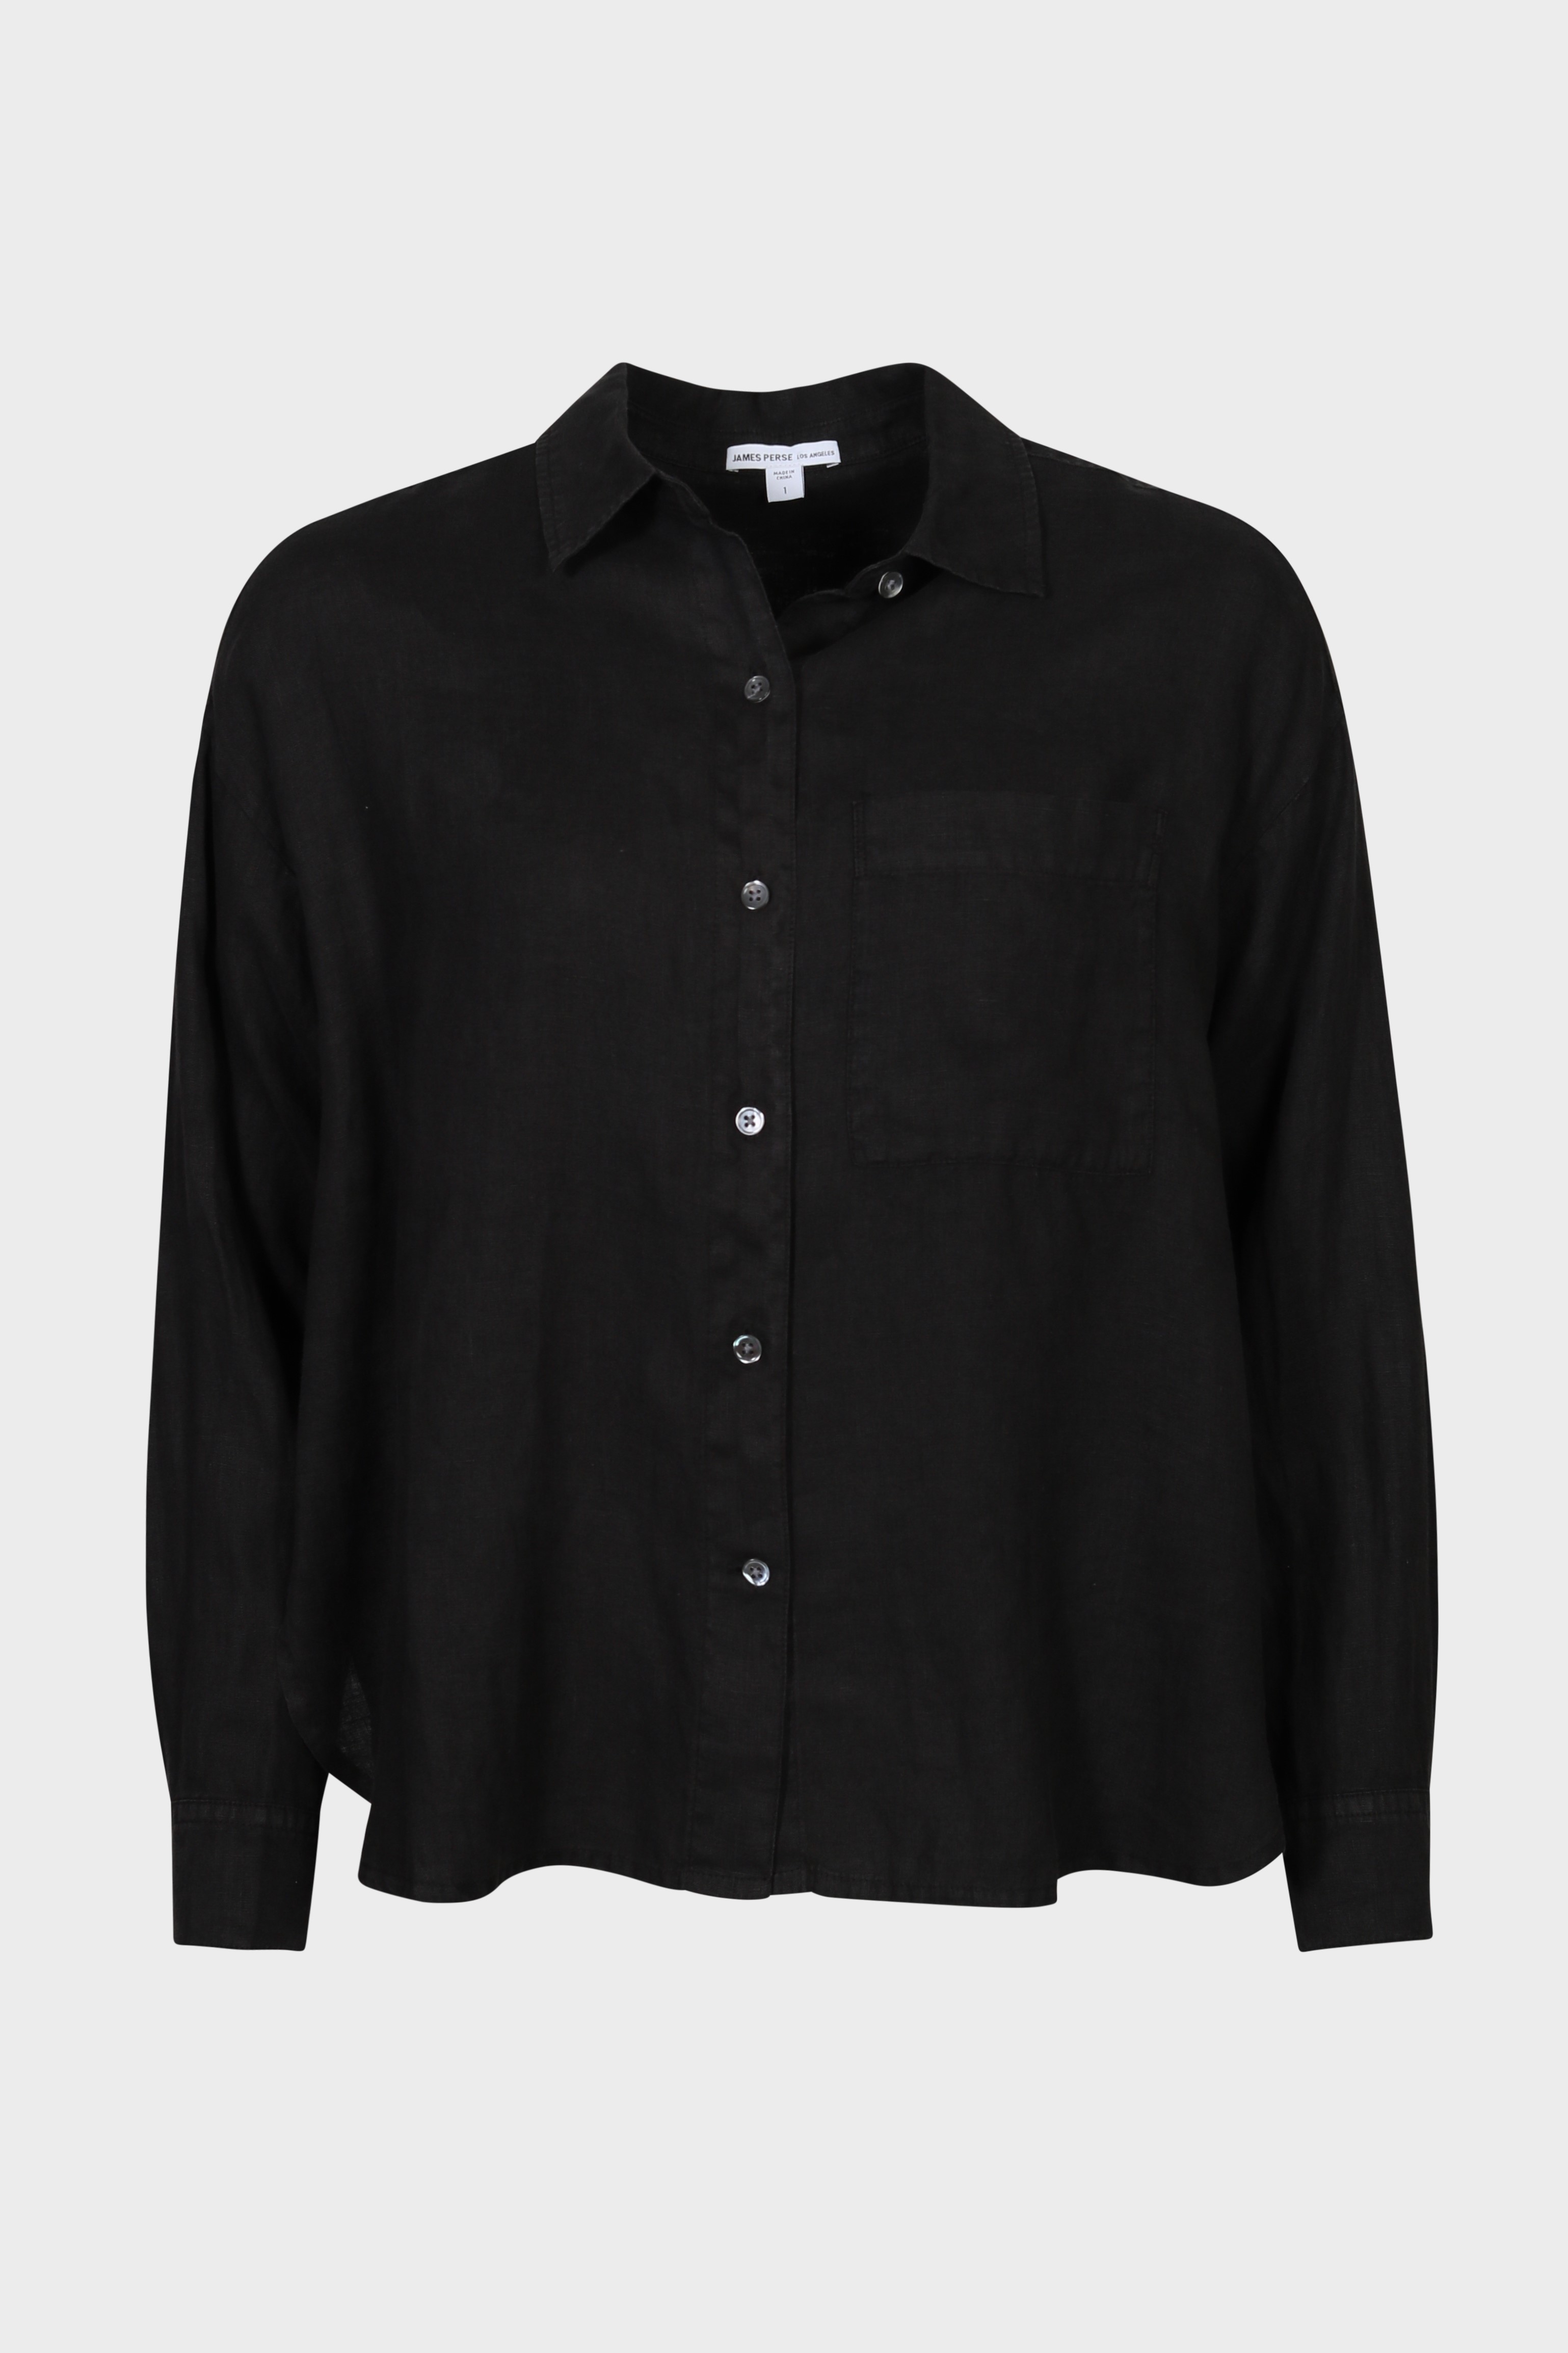 JAMES PERSE Garment Dyed Linen Oversize Shirt in Black